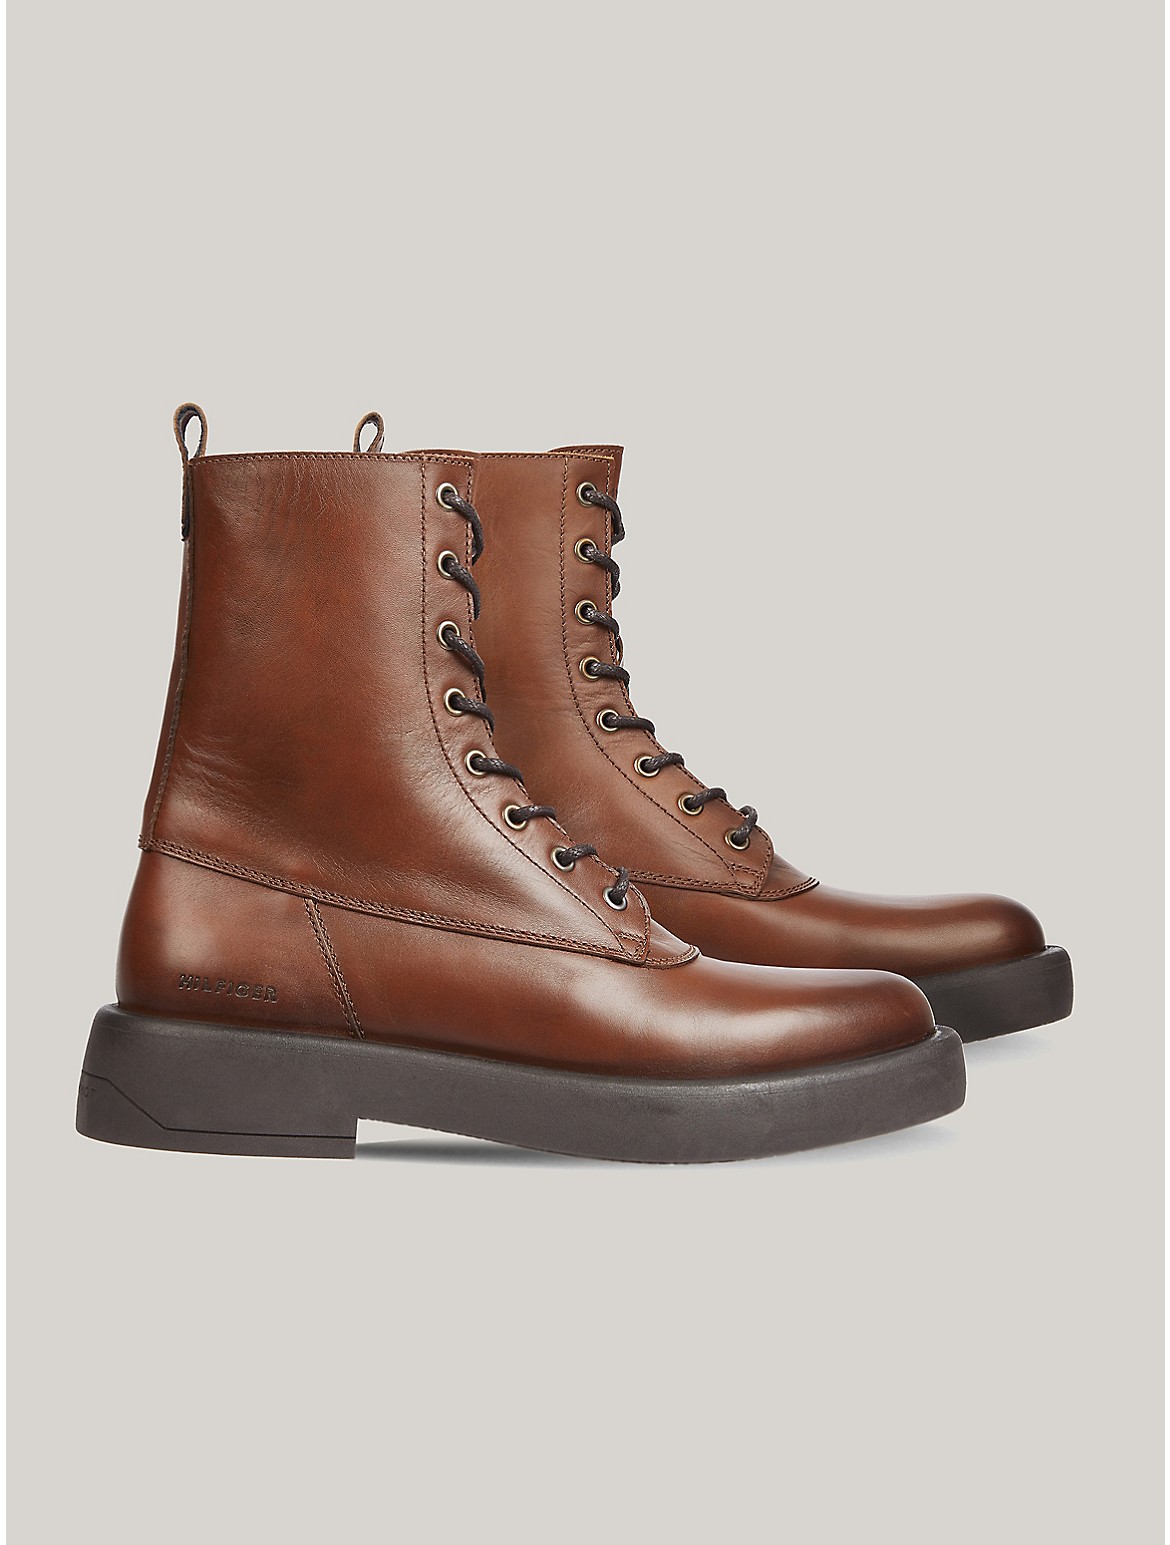 Tommy Hilfiger Men's Cognac Leather Boot